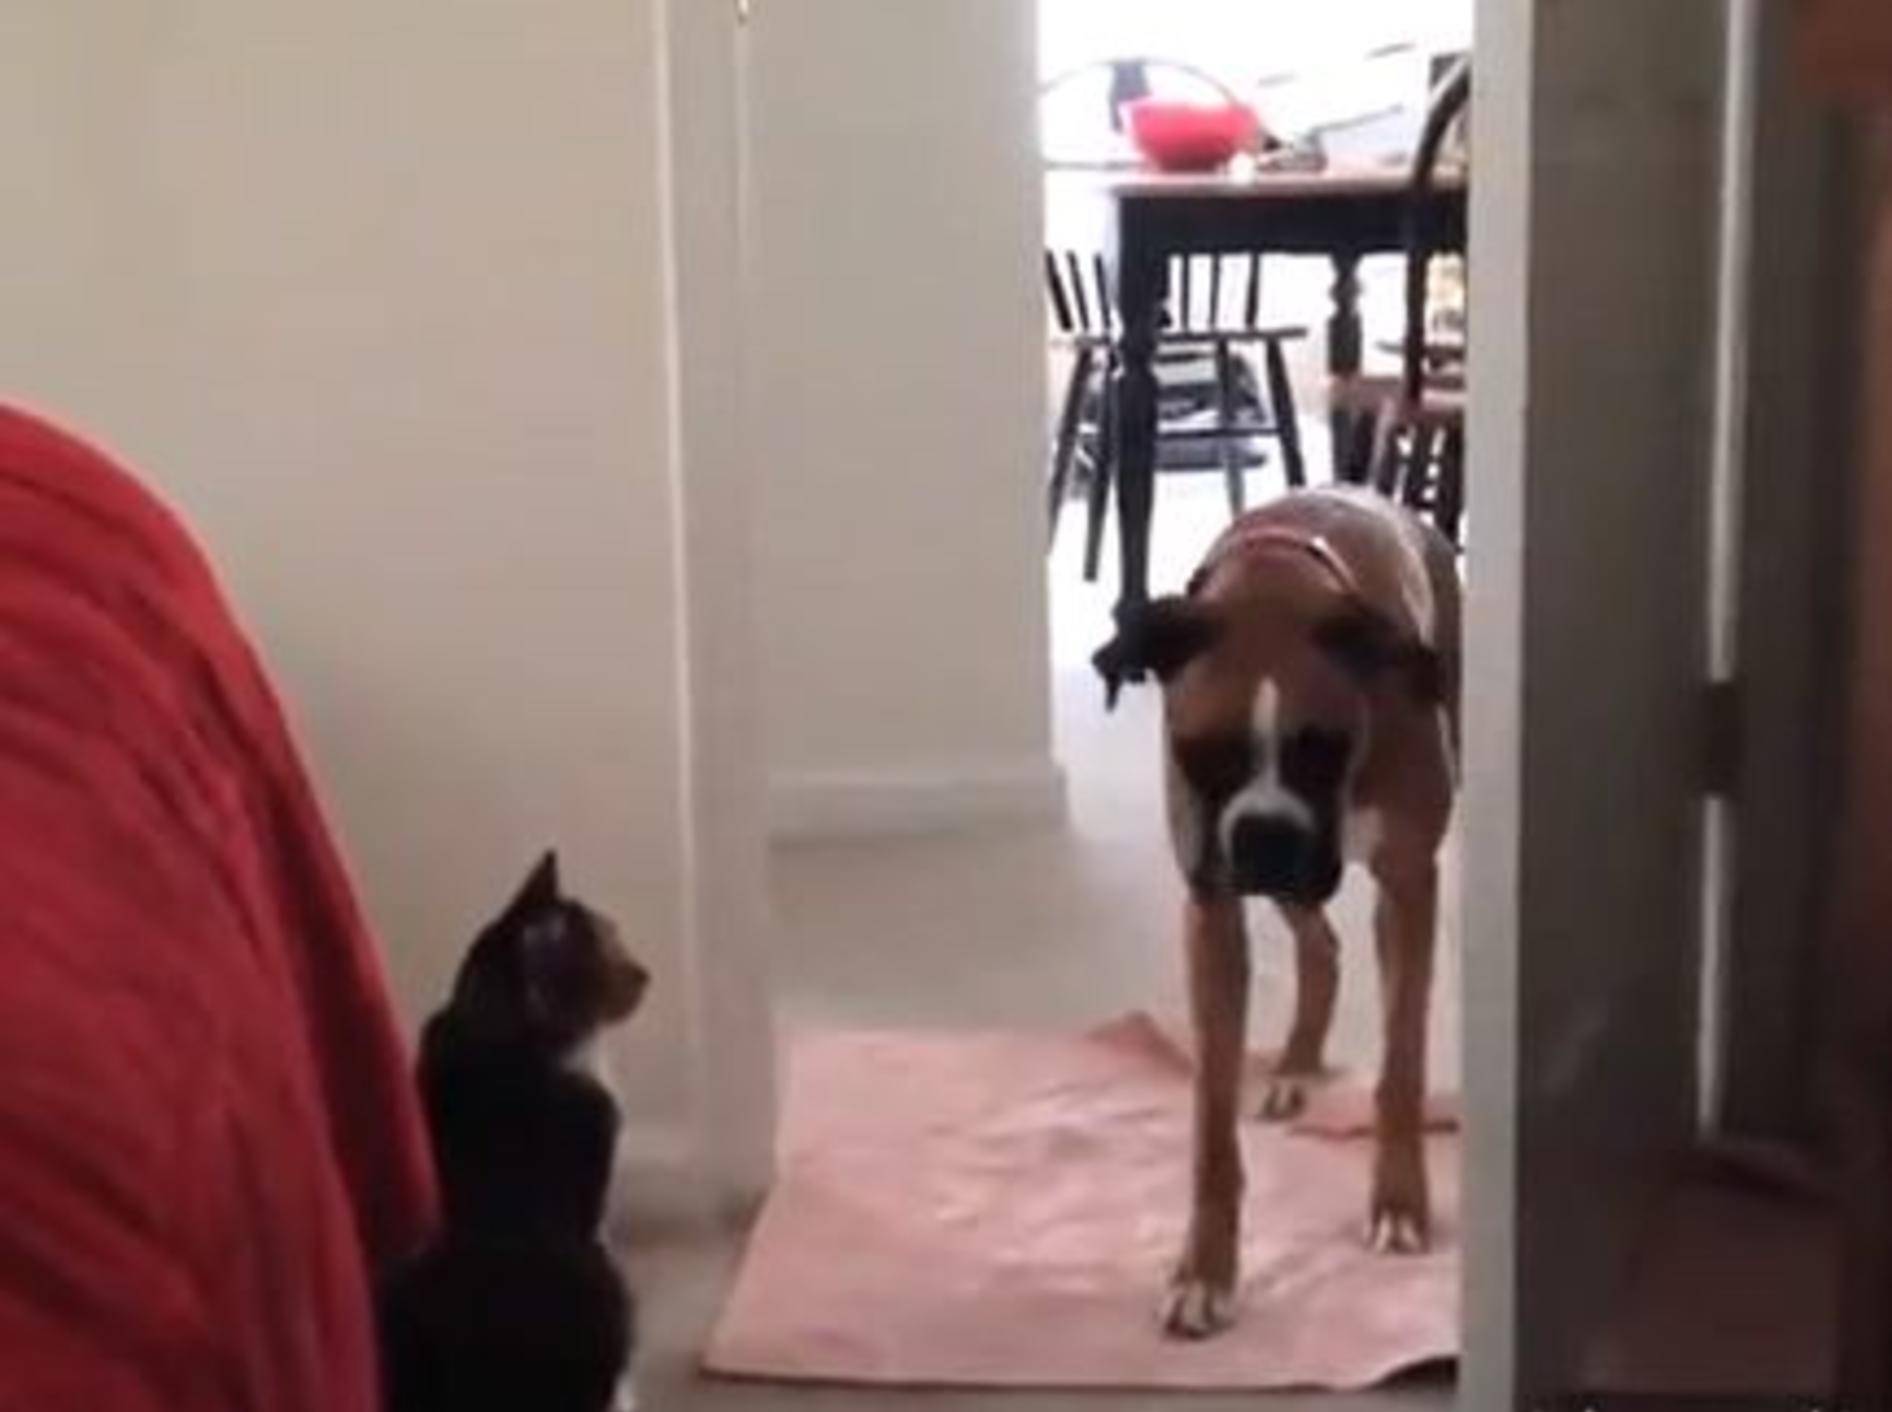 Katzen vs. Hunde: "Du kommst hier nicht durch!" – Bild: Yotube / happymedulla